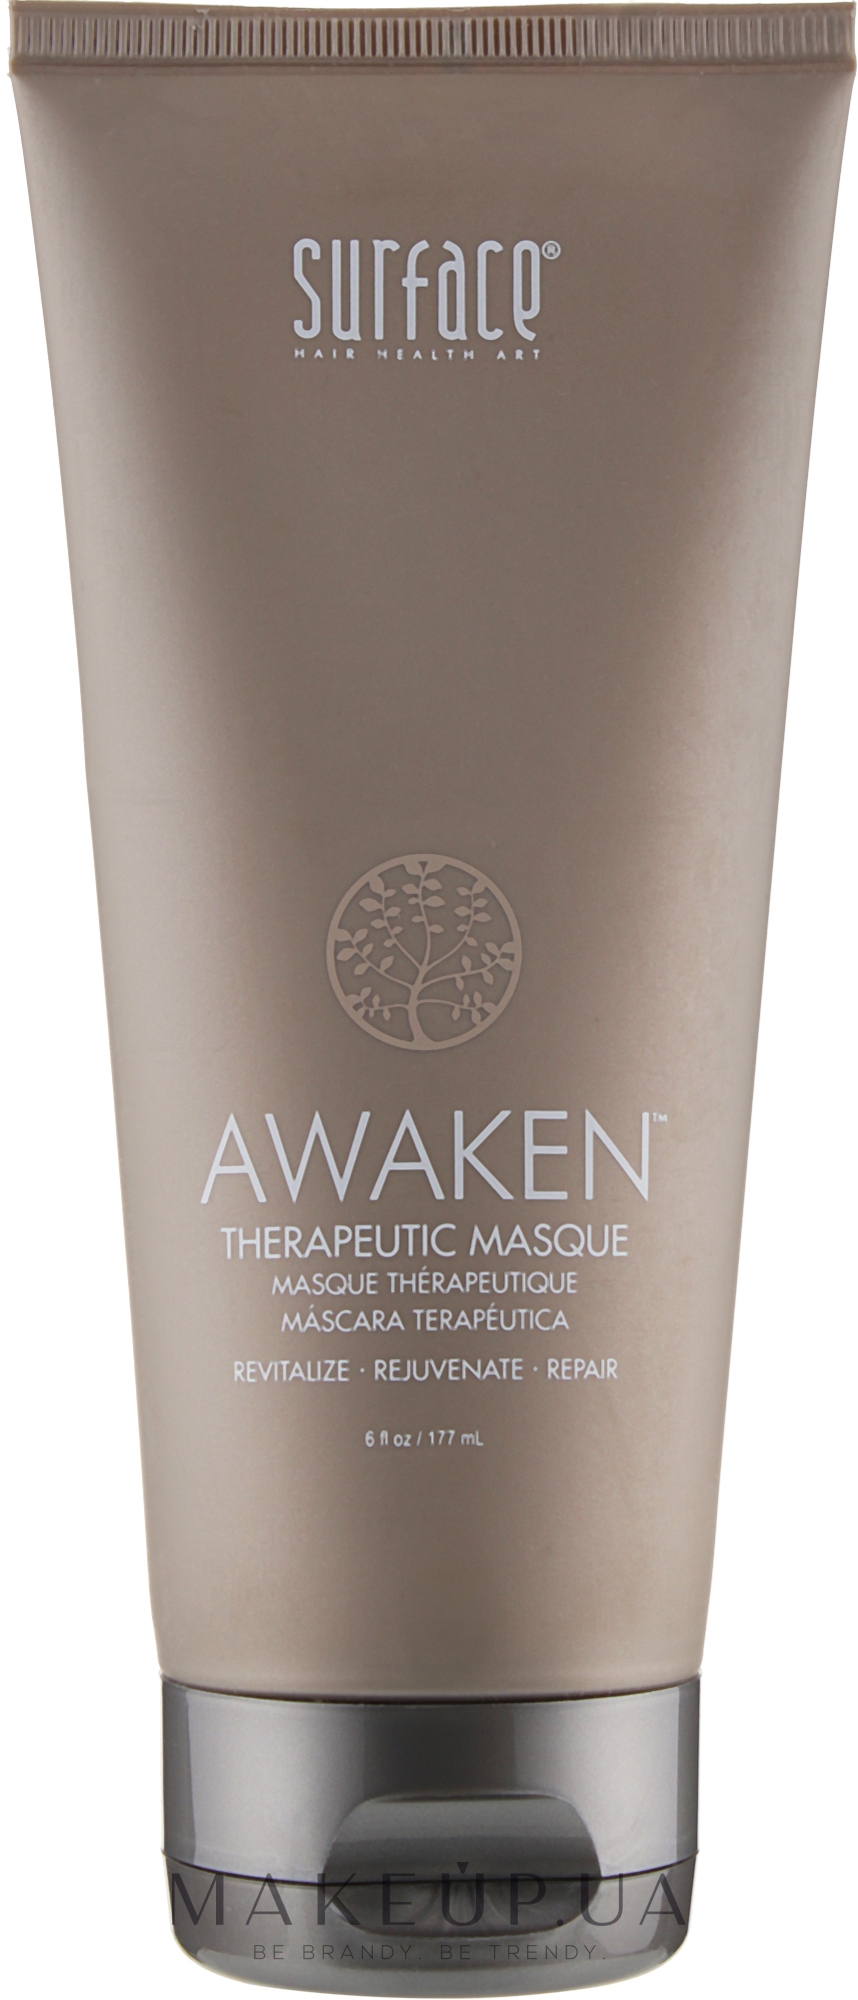 surface awaken therapeutic masque